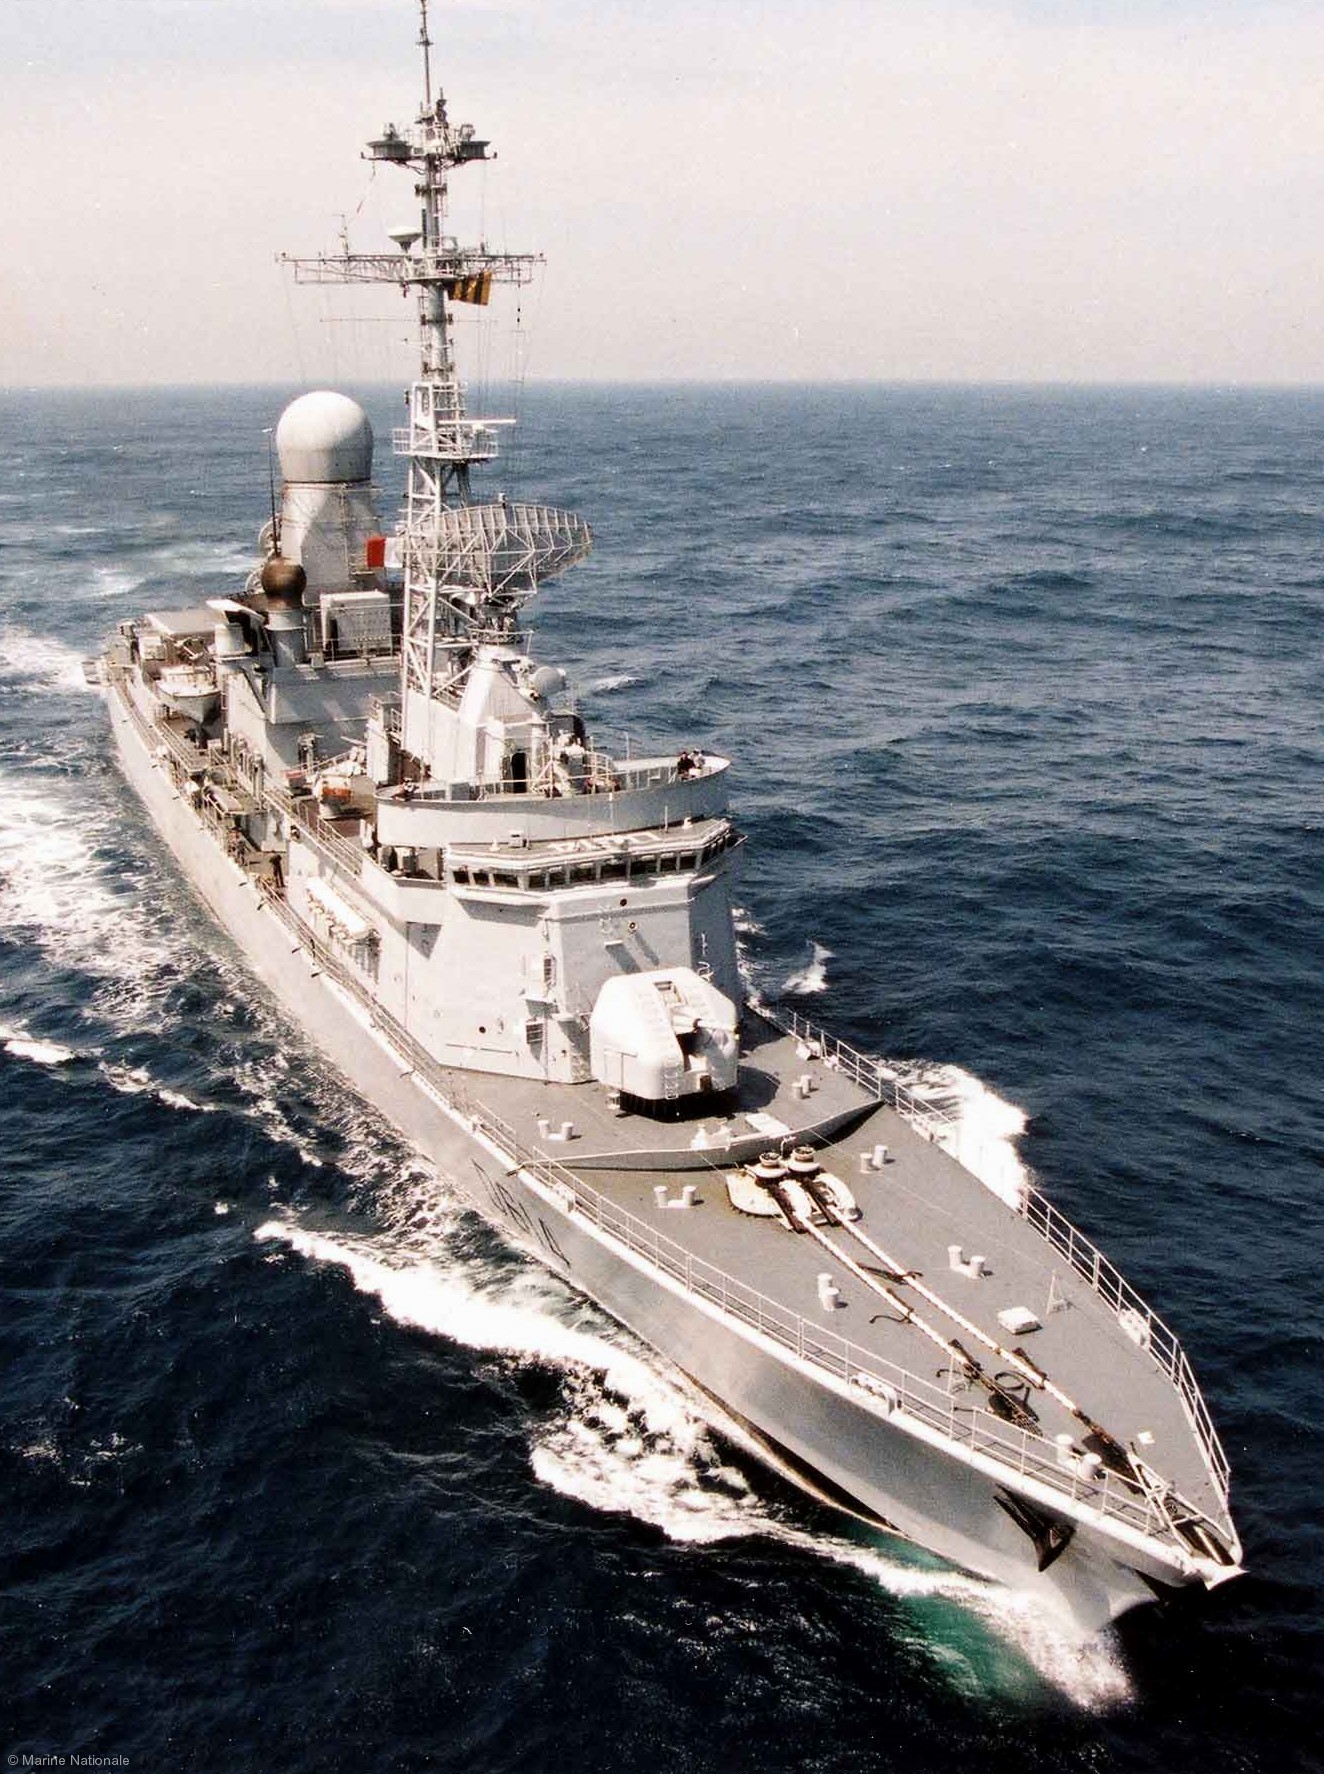 d-614 fs cassard f70aa class air defense frigate french navy marine nationale 10